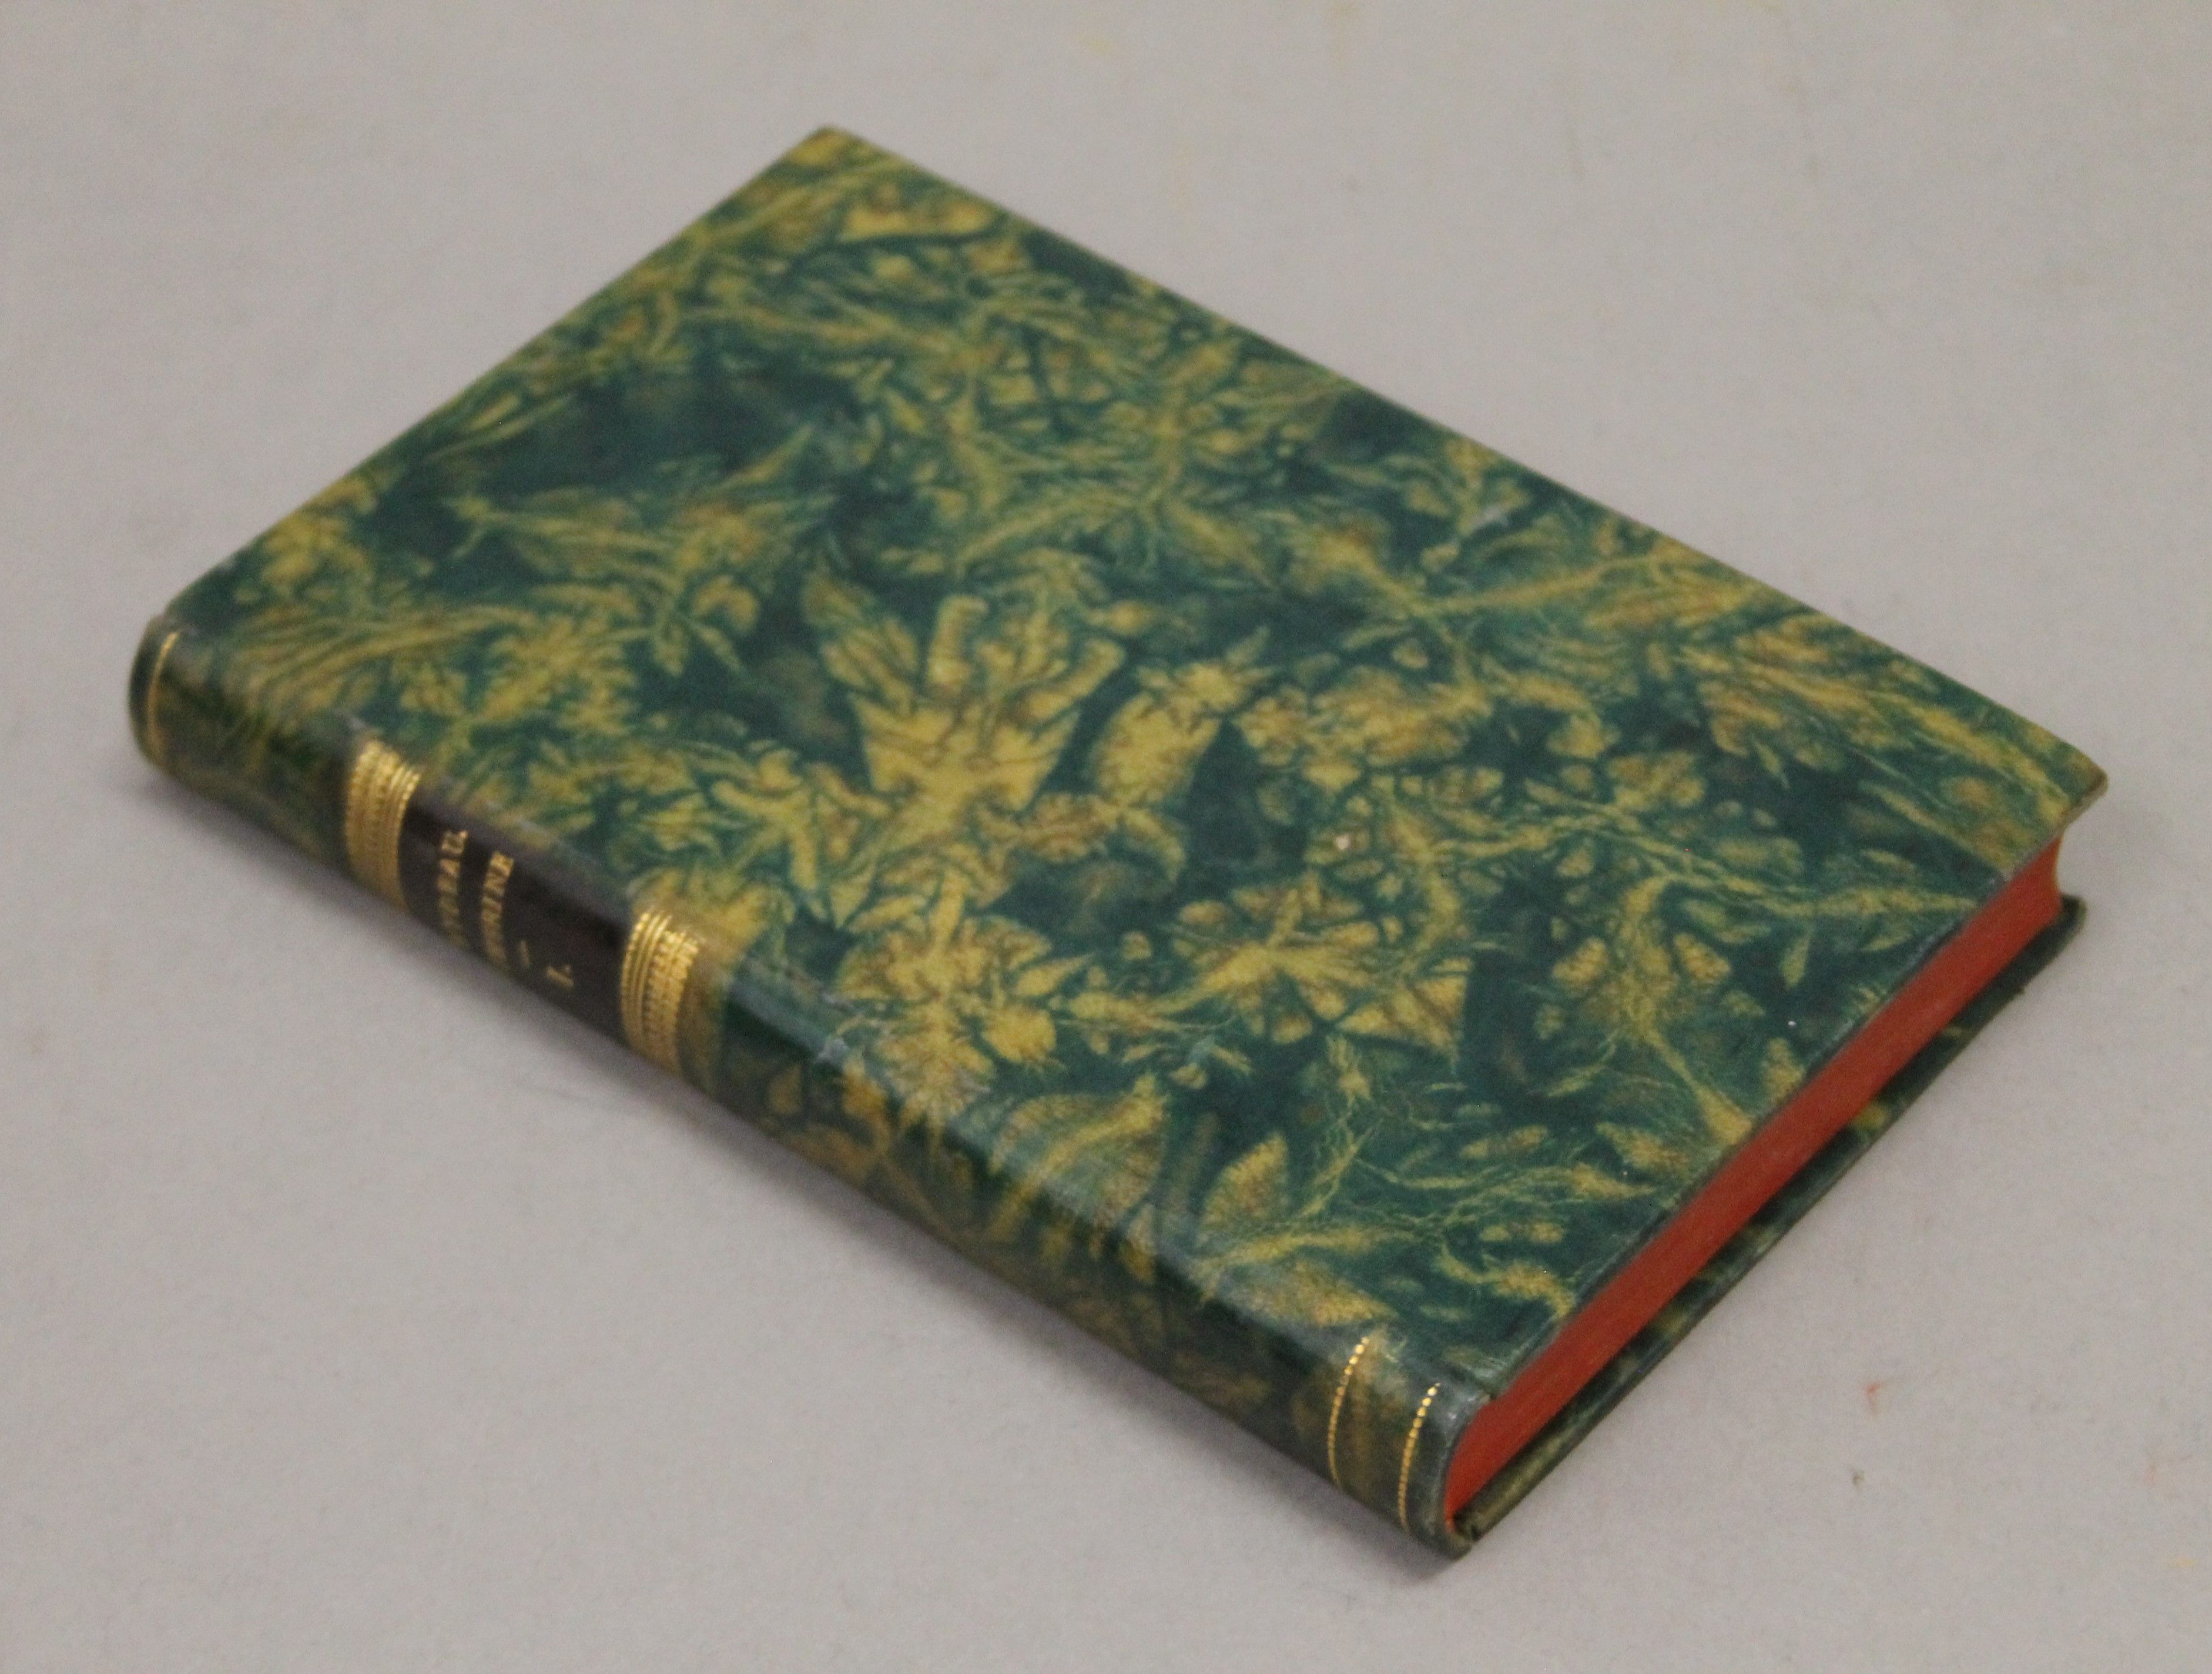 Mogador (Celeste), Memoires de Celeste Mogador, 4 vols, finely bound in half blue morocco, Paris, - Image 28 of 31